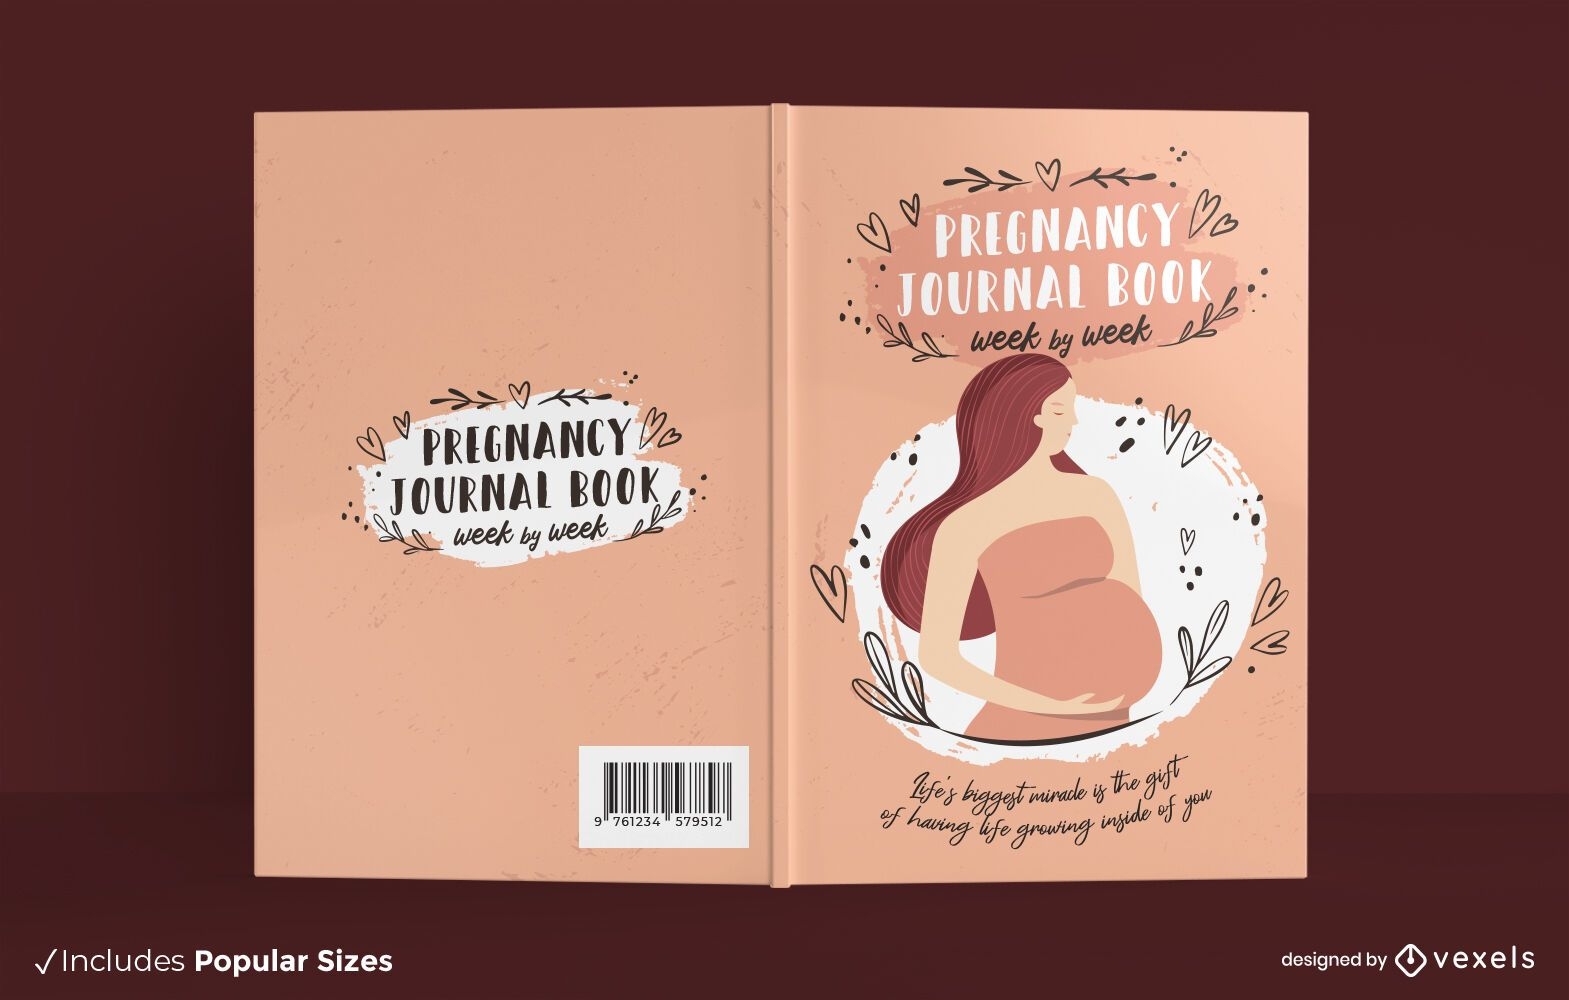 Descarga Vector De Diseño De Portada De Libro De Diario De Embarazo